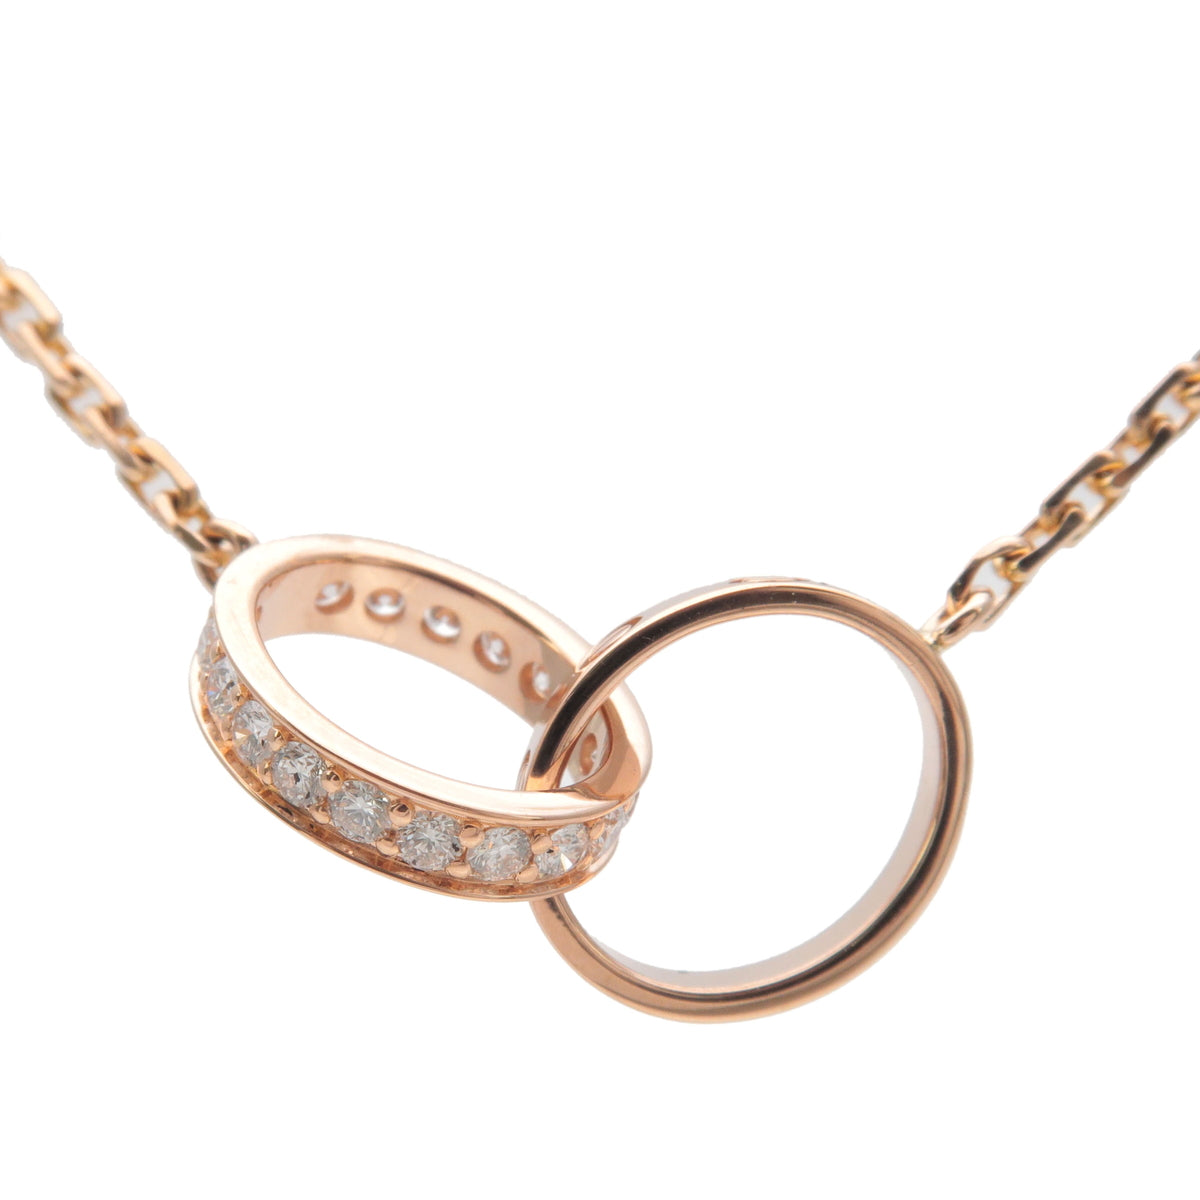 Cartier Baby Love Diamond Necklace K18PG 750 Rose Gold